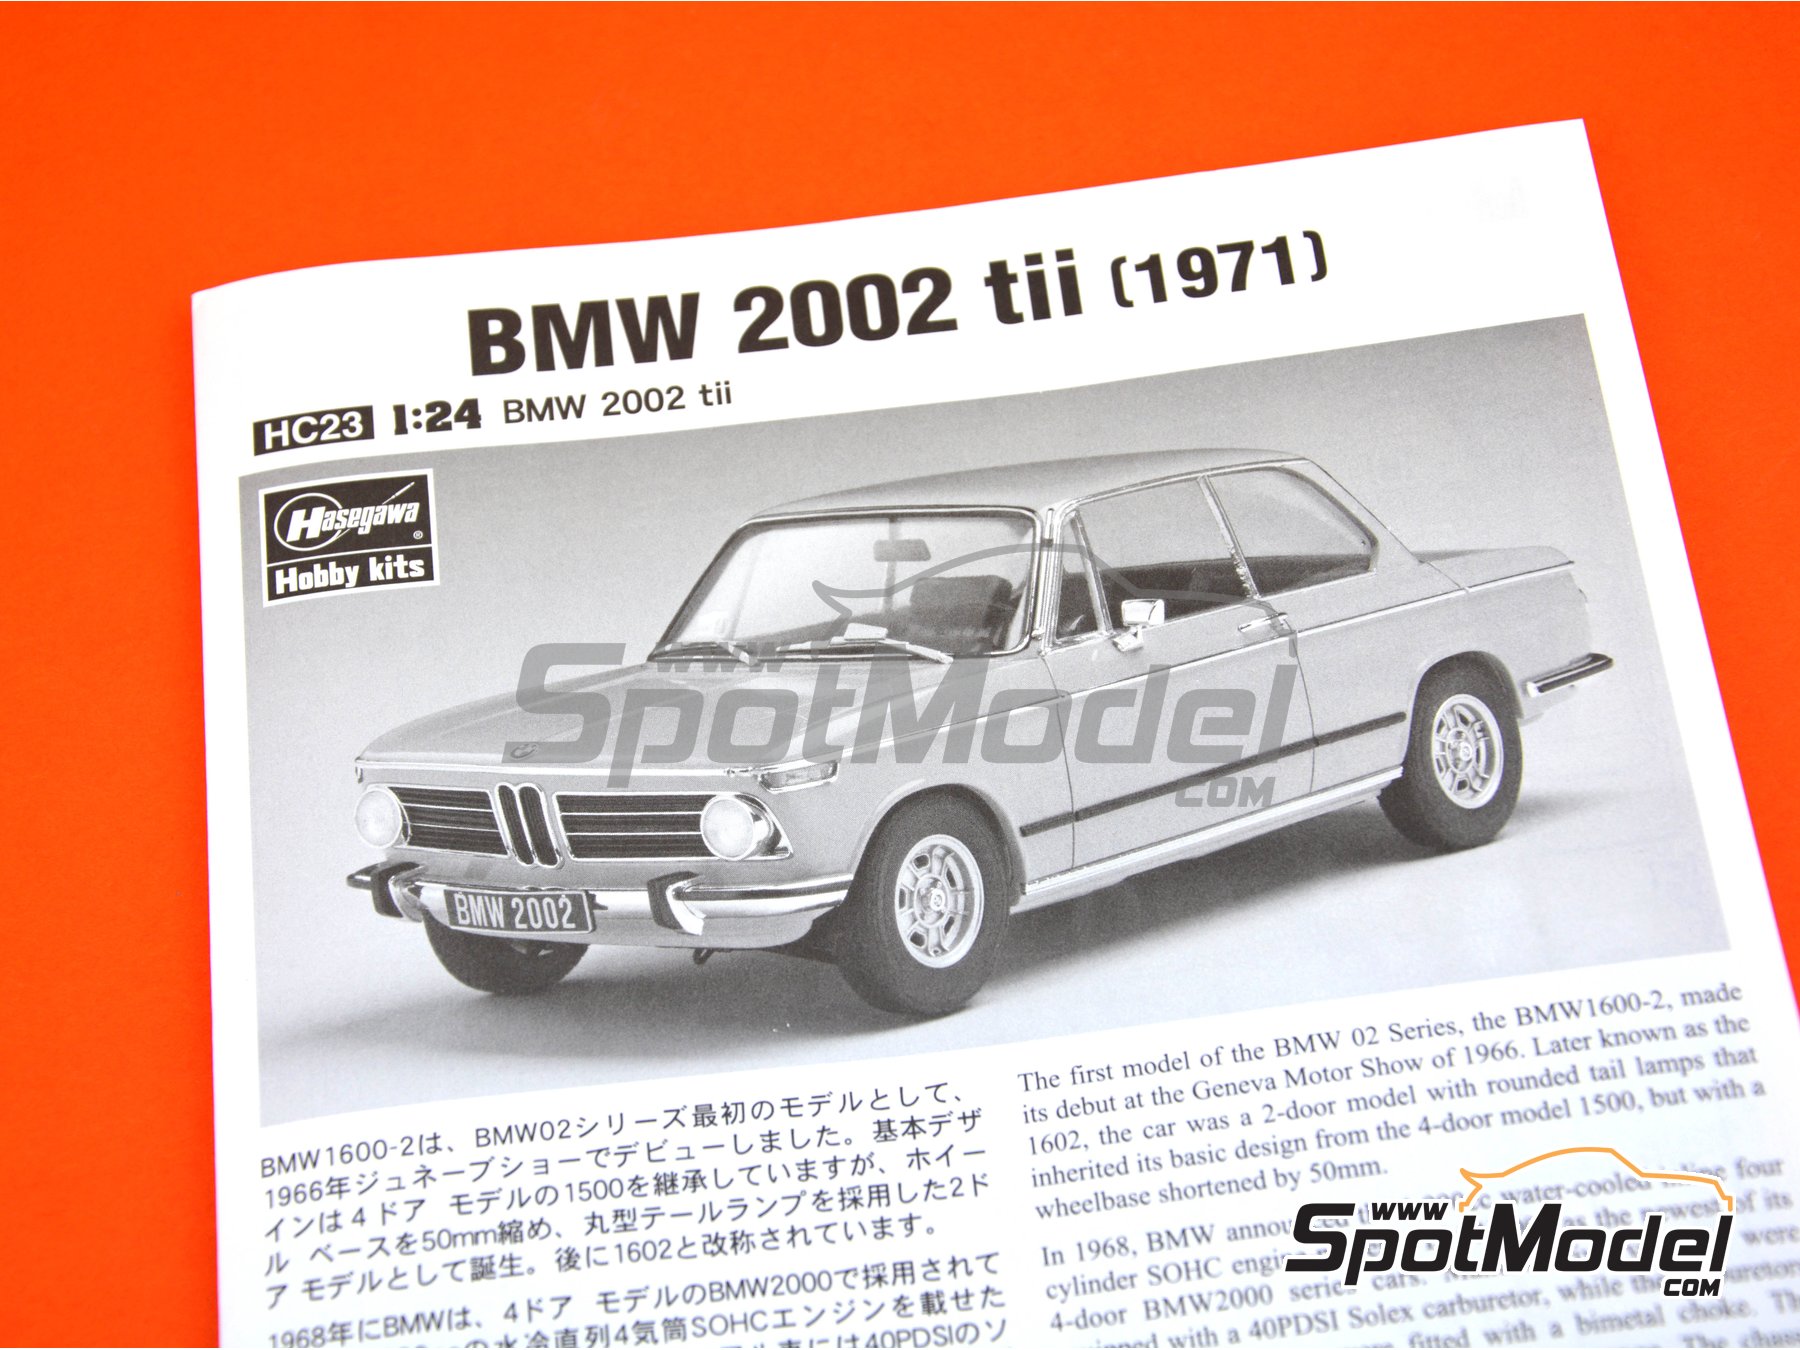 Hasegawa HC23 BMW 2002 tii 1/24 kit